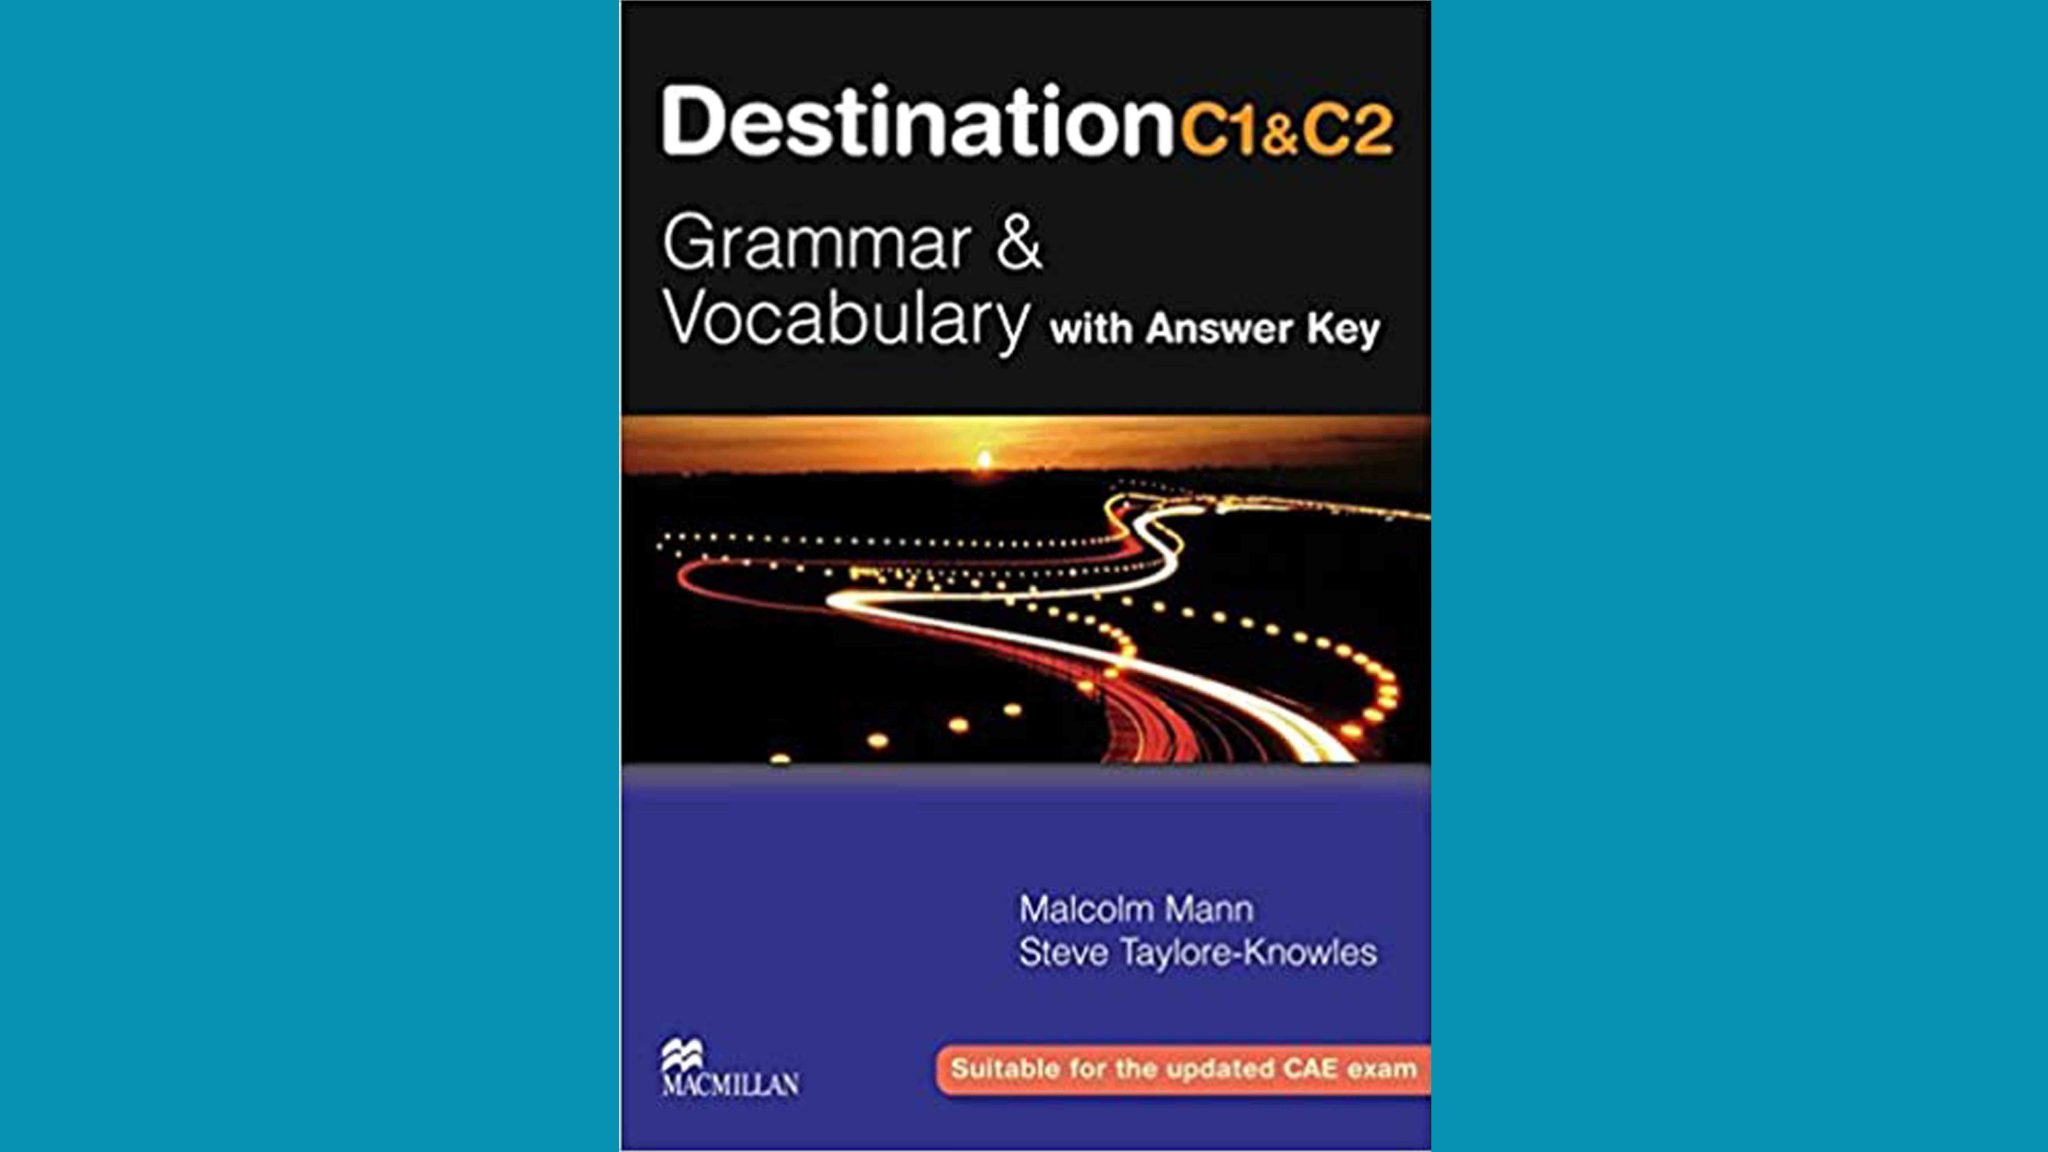 Destination C1, C2: Grammar & Vocabulary - PDF Download